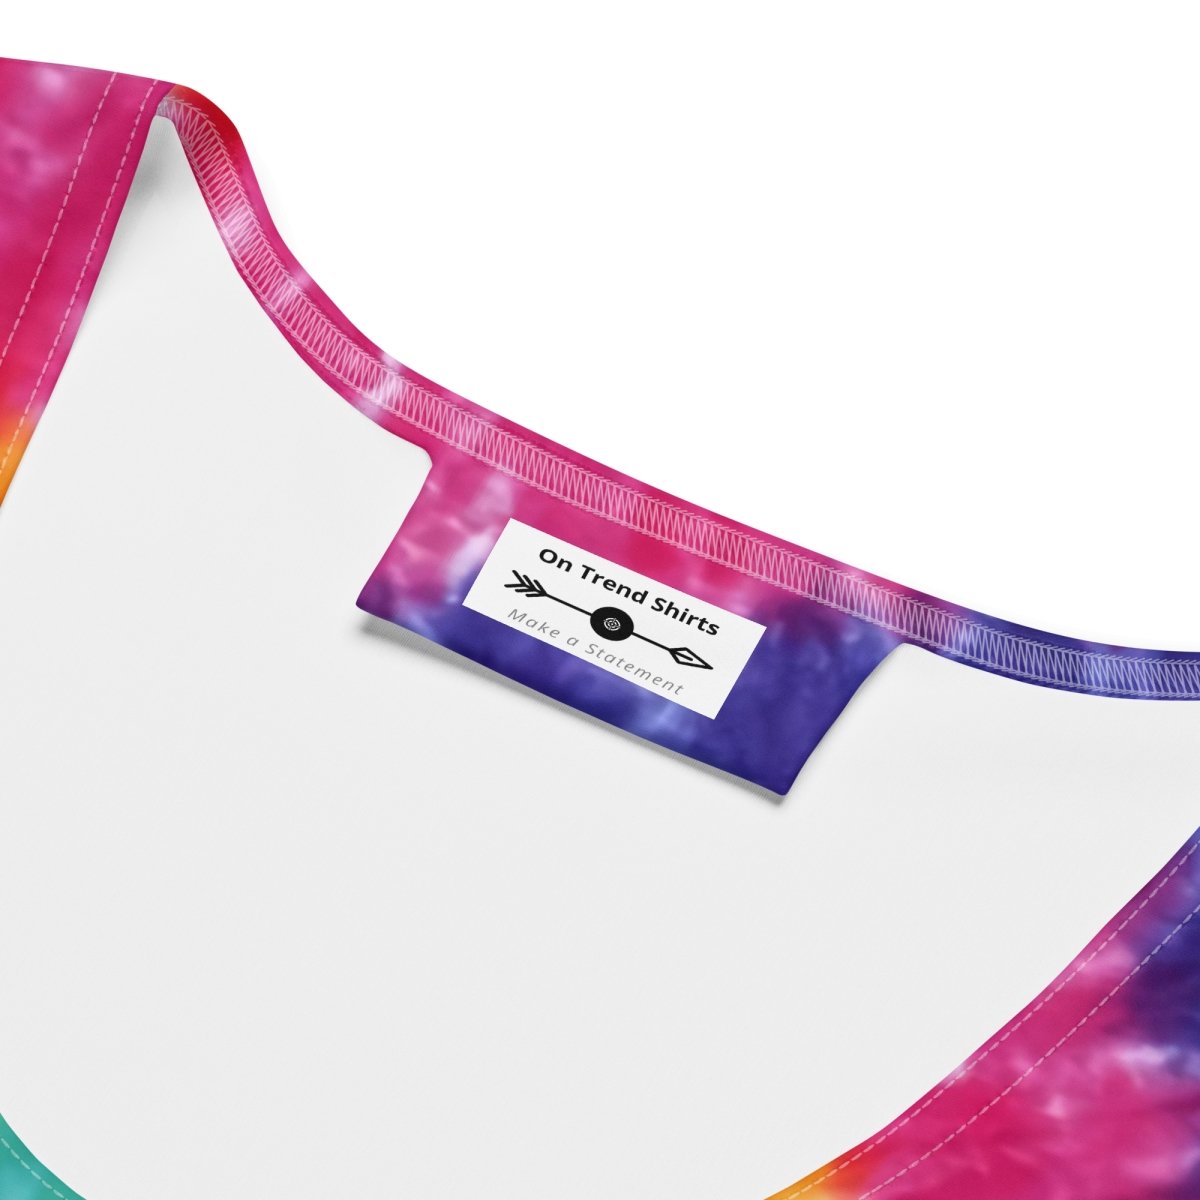 Rainbow Tie Dye Crop Top - On Trend Shirts